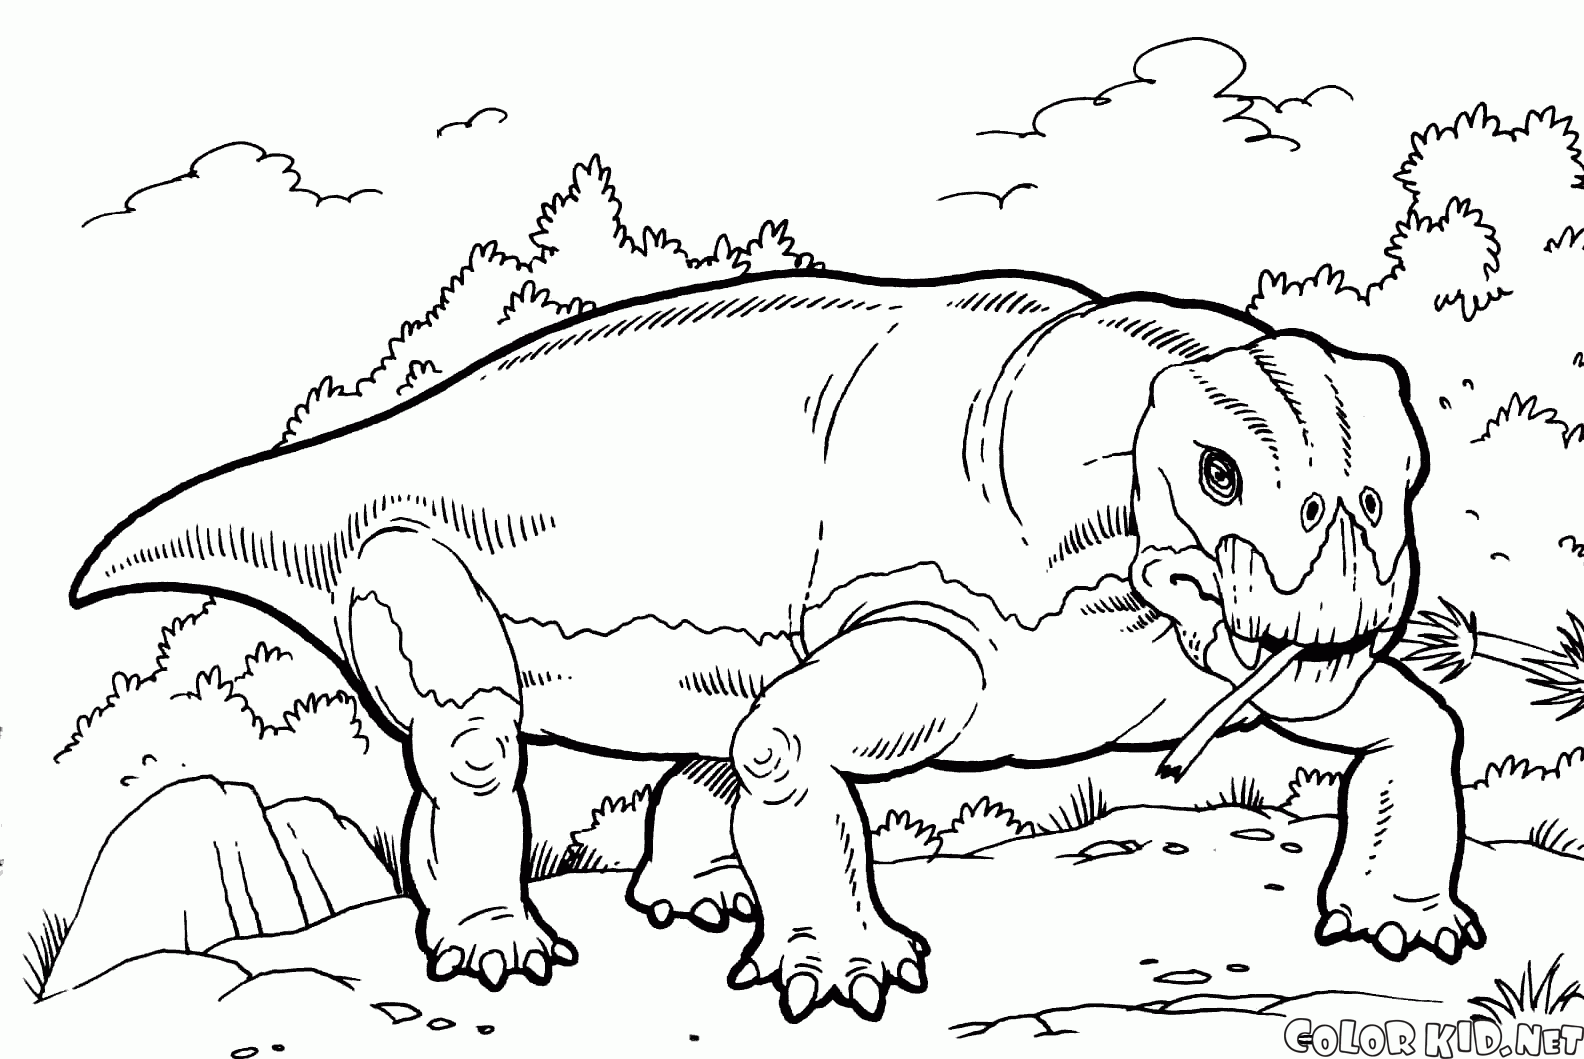 Lystrosaurus